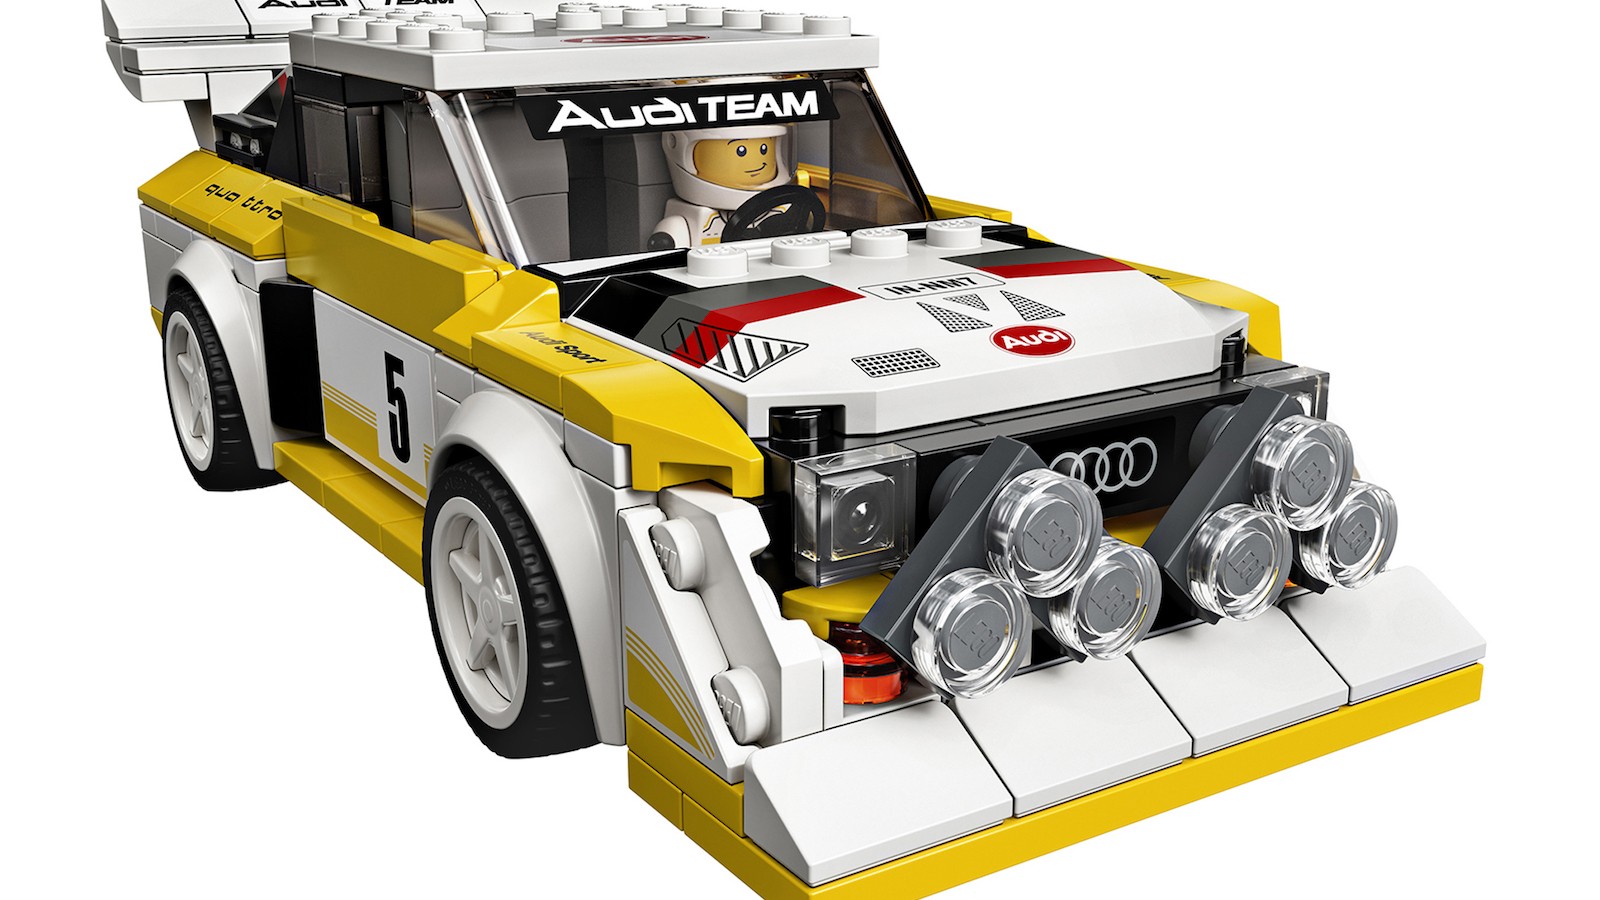 Lego classic cars